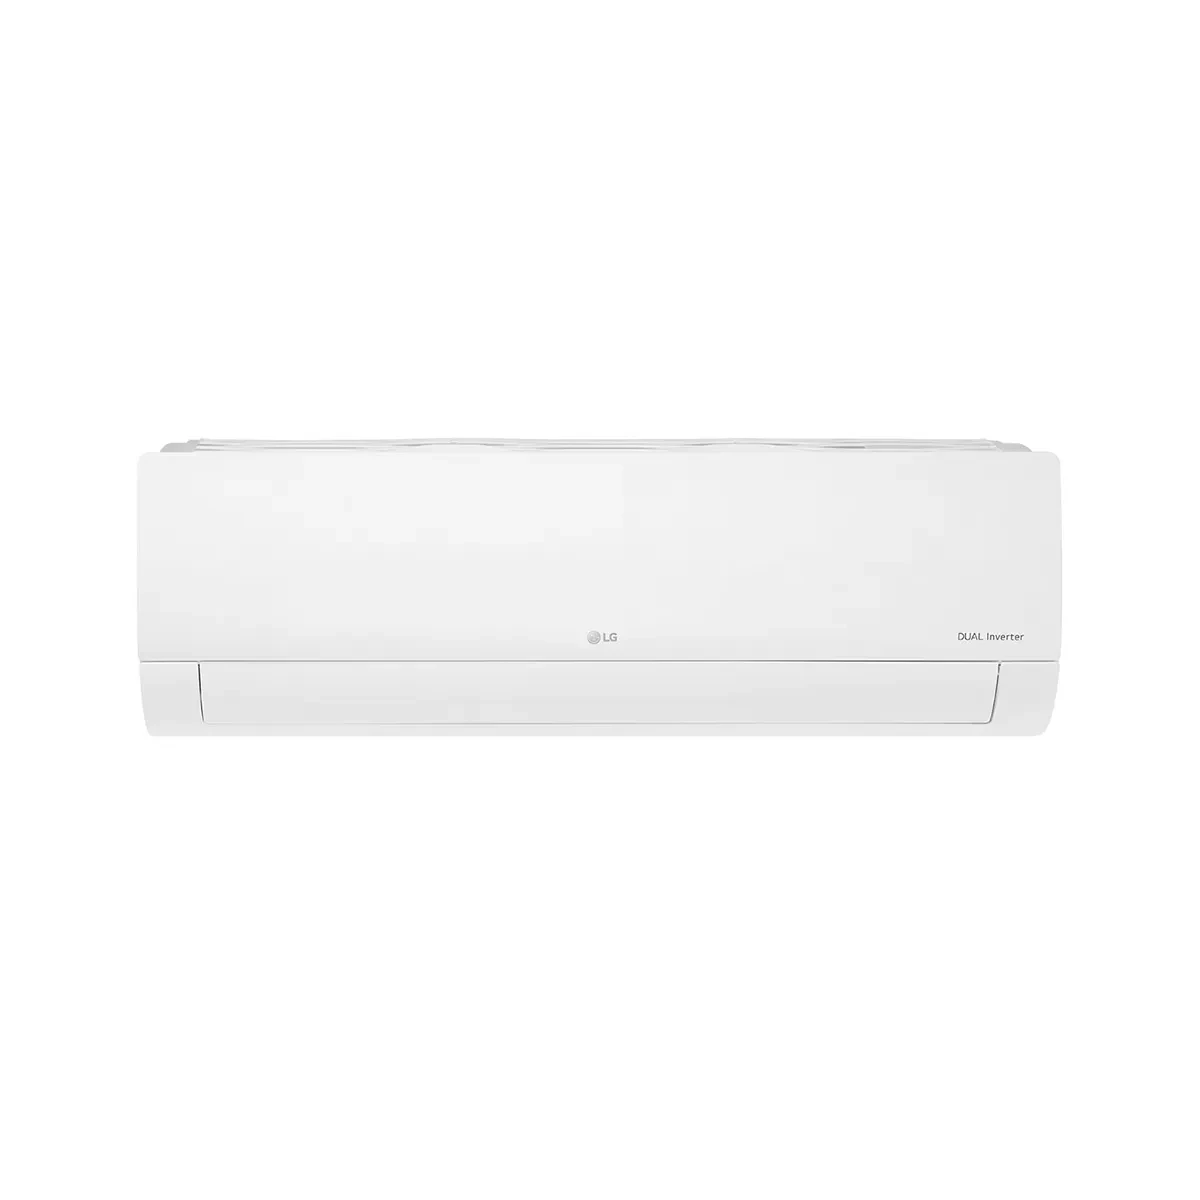 LG - Air condition,Split, 4HP,cooling,Inverter,white